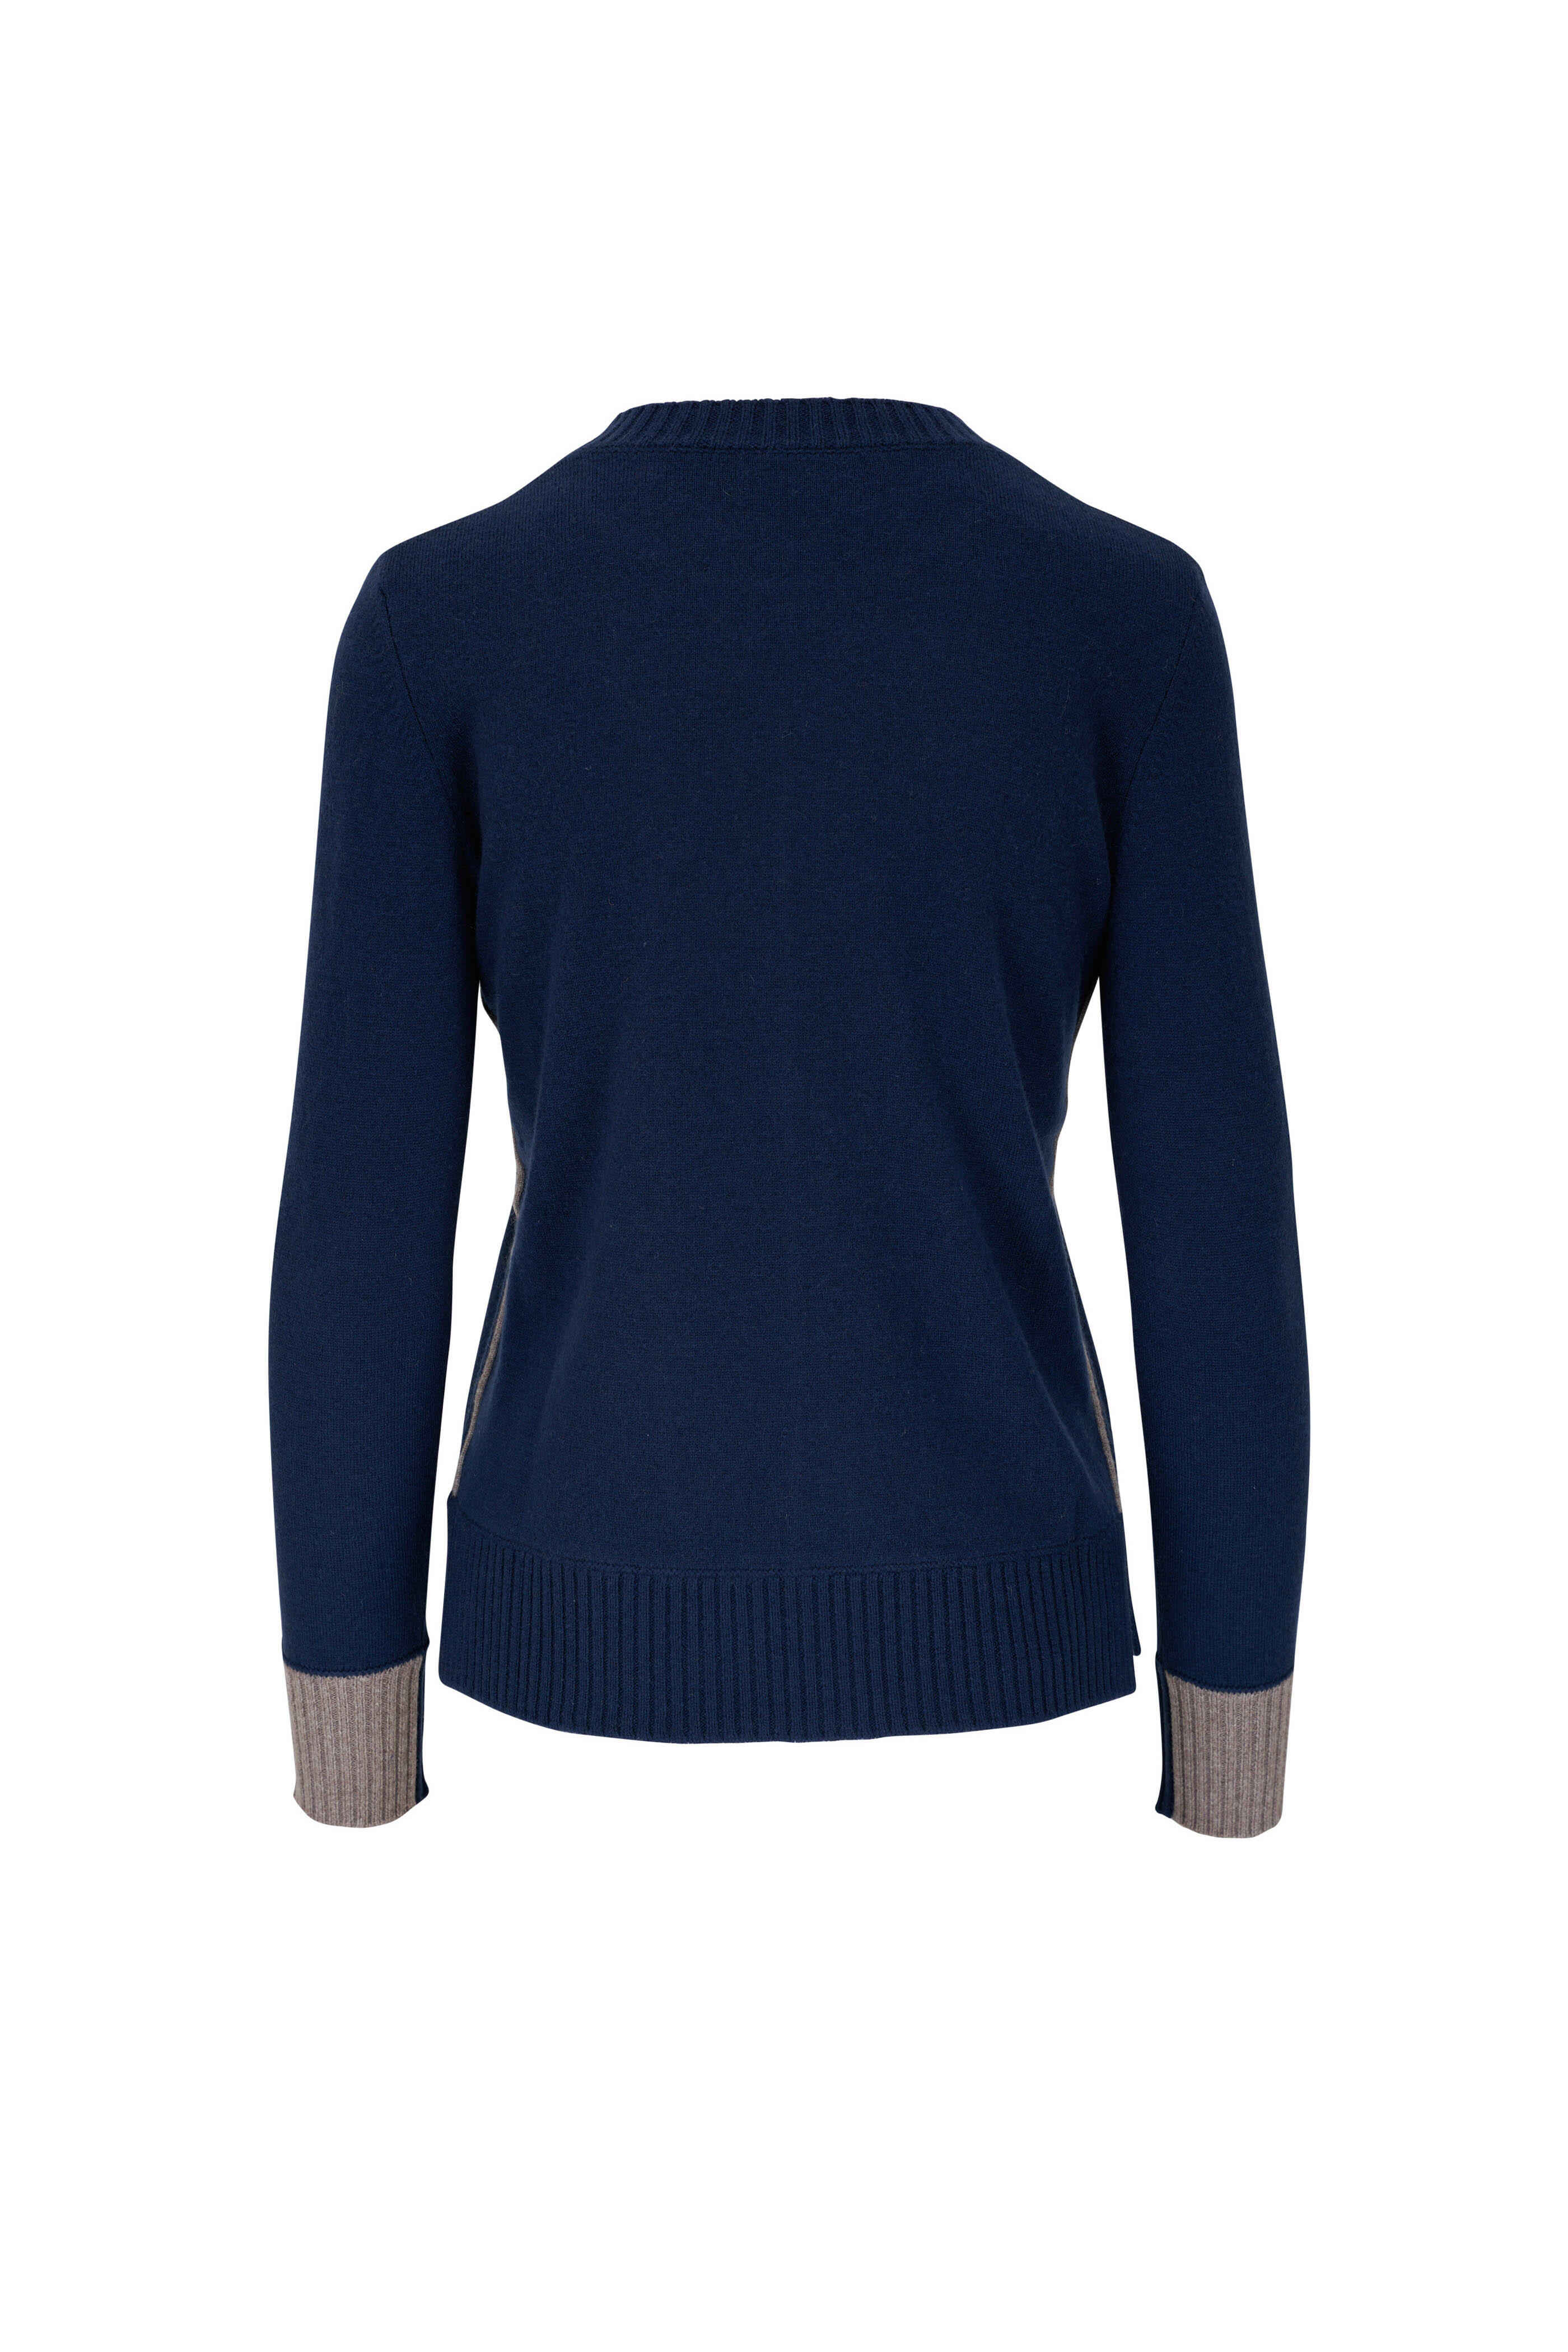 Kinross - Navy & Seal Contrast Trim Crewneck Sweater